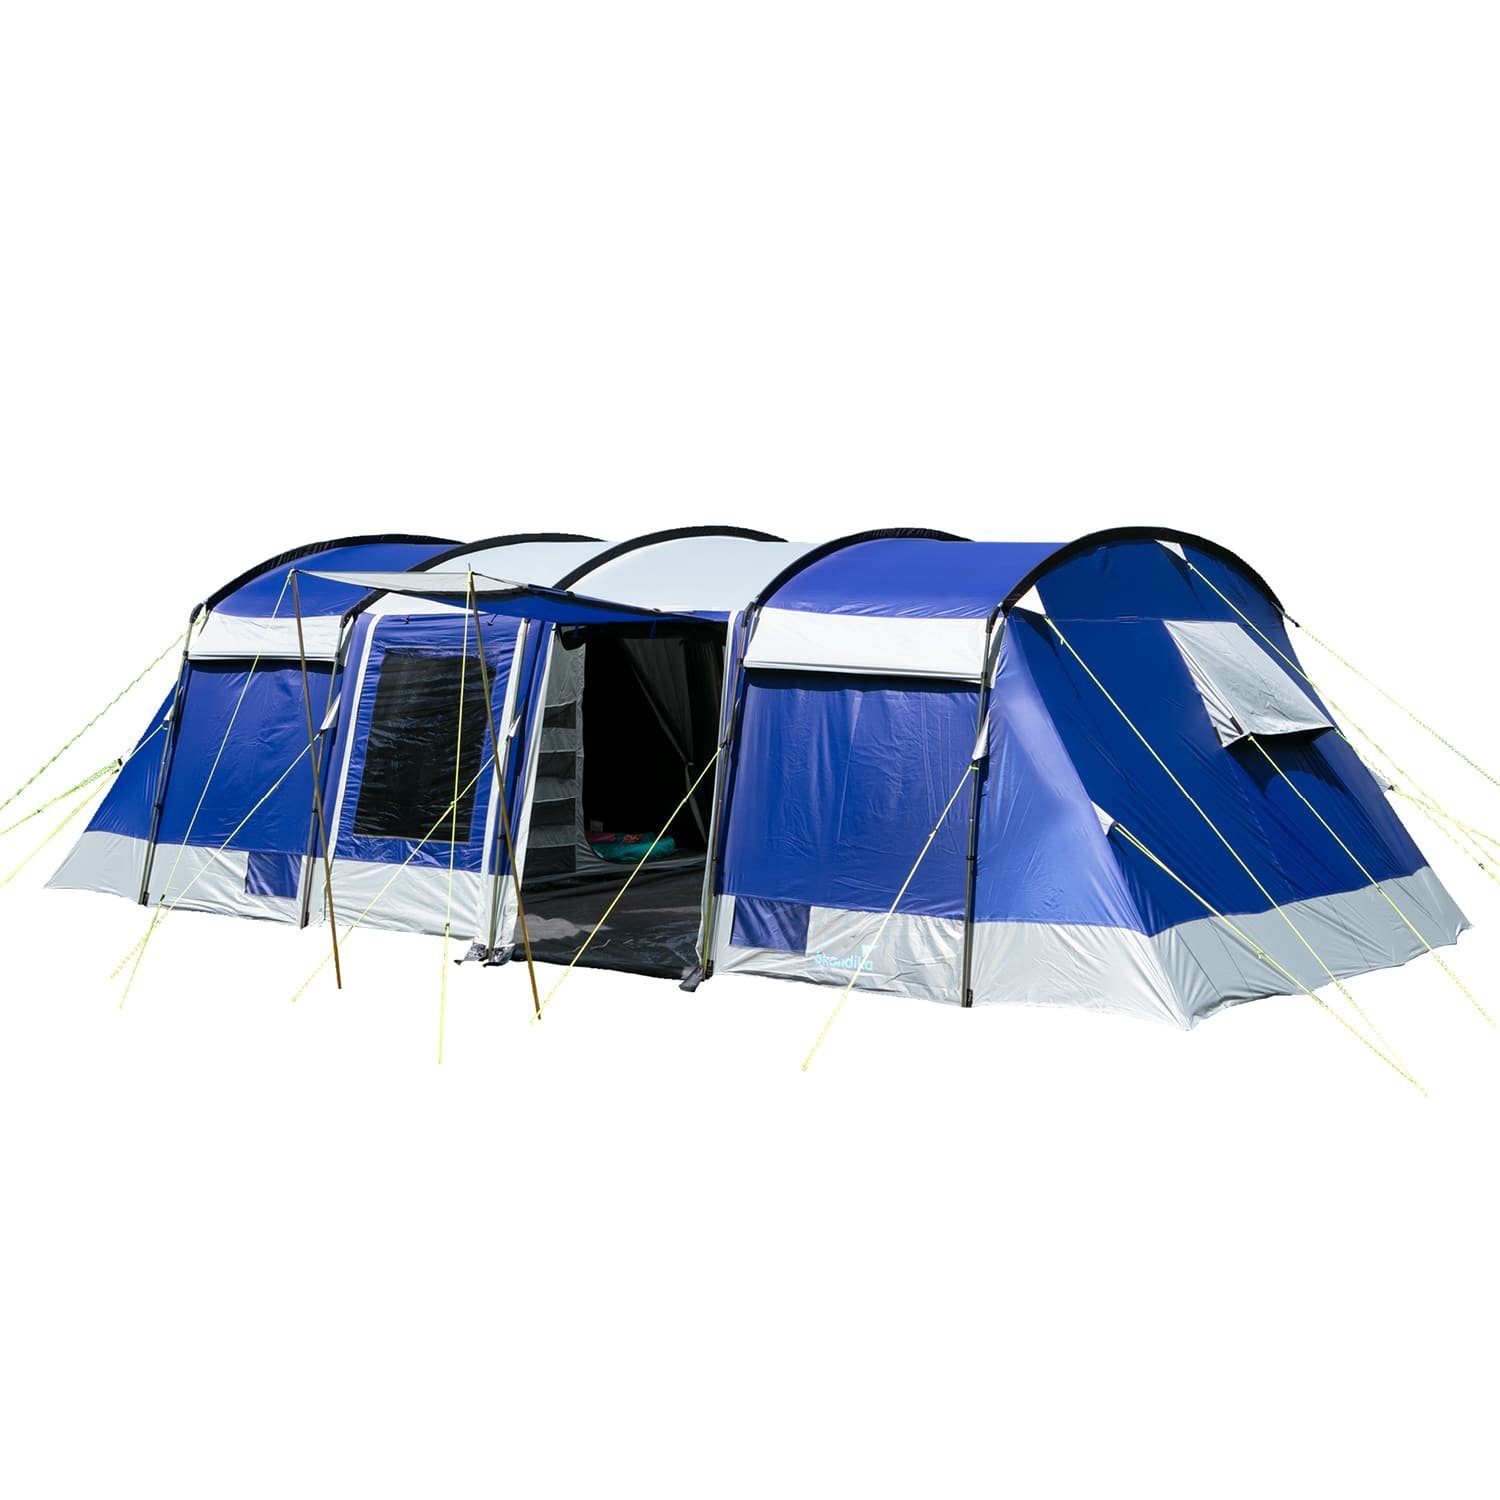 Skandika Tunnelzelt Montana 14 Sleeper (blau), Camping Zelt, Sleeper Technologie, Schwarze Schlafkabinen